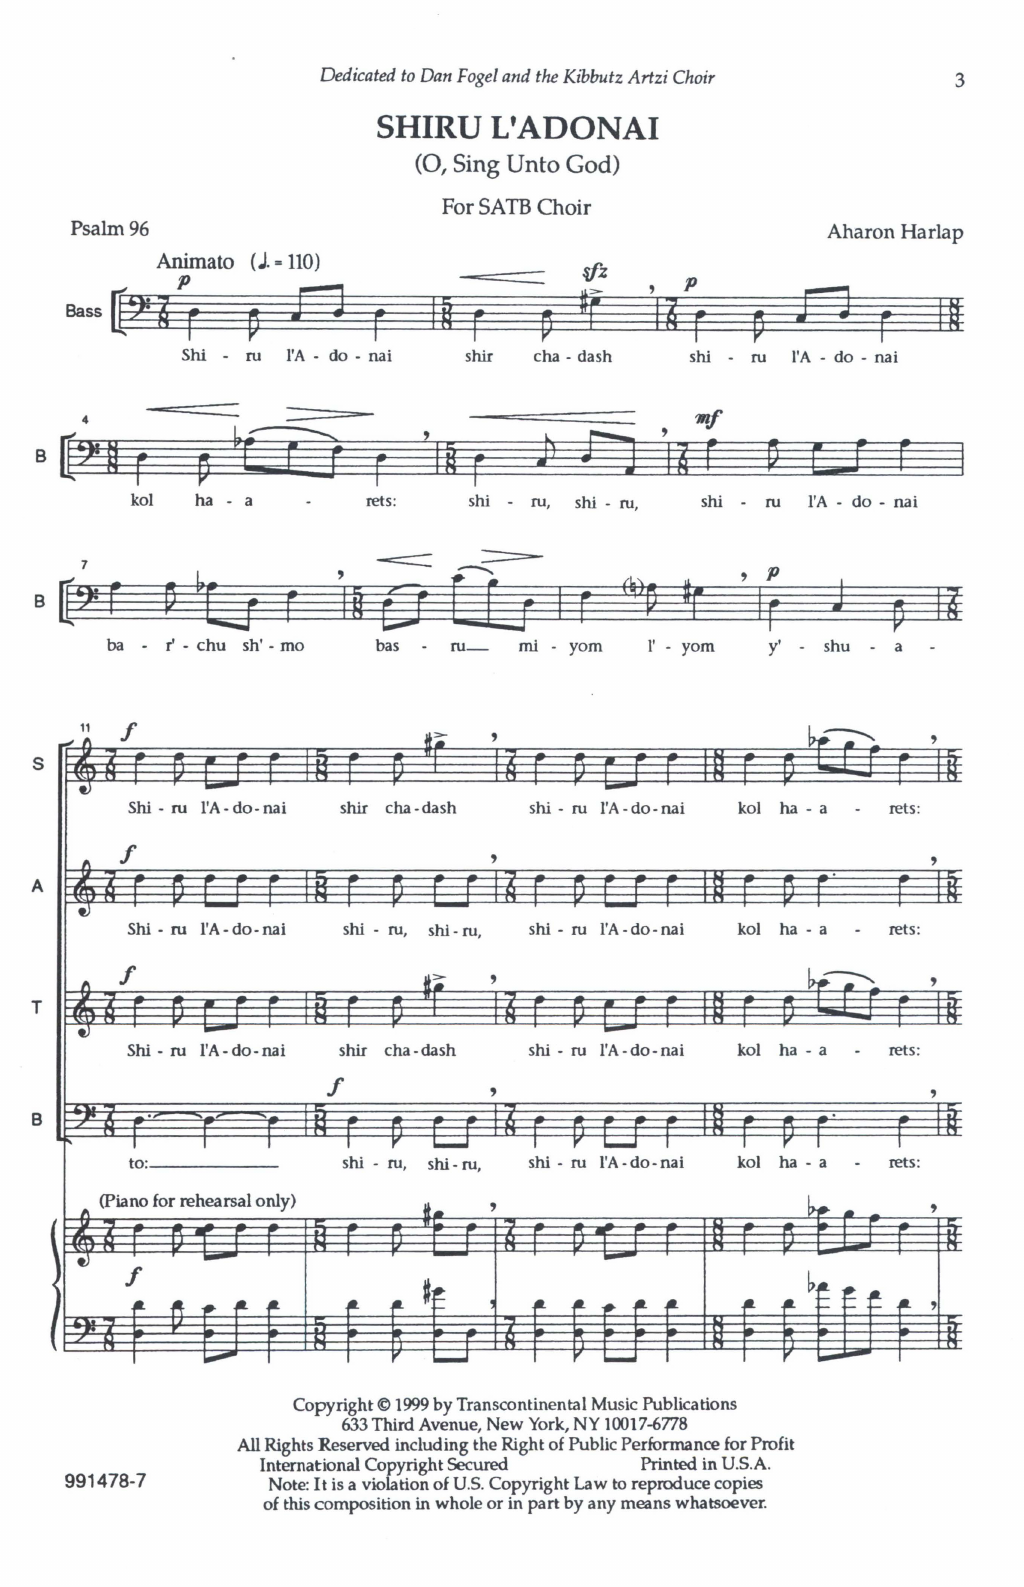 Download Aahron Harlap Shiru L'adonai (O Sing Unto God) Sheet Music and learn how to play SATB Choir PDF digital score in minutes